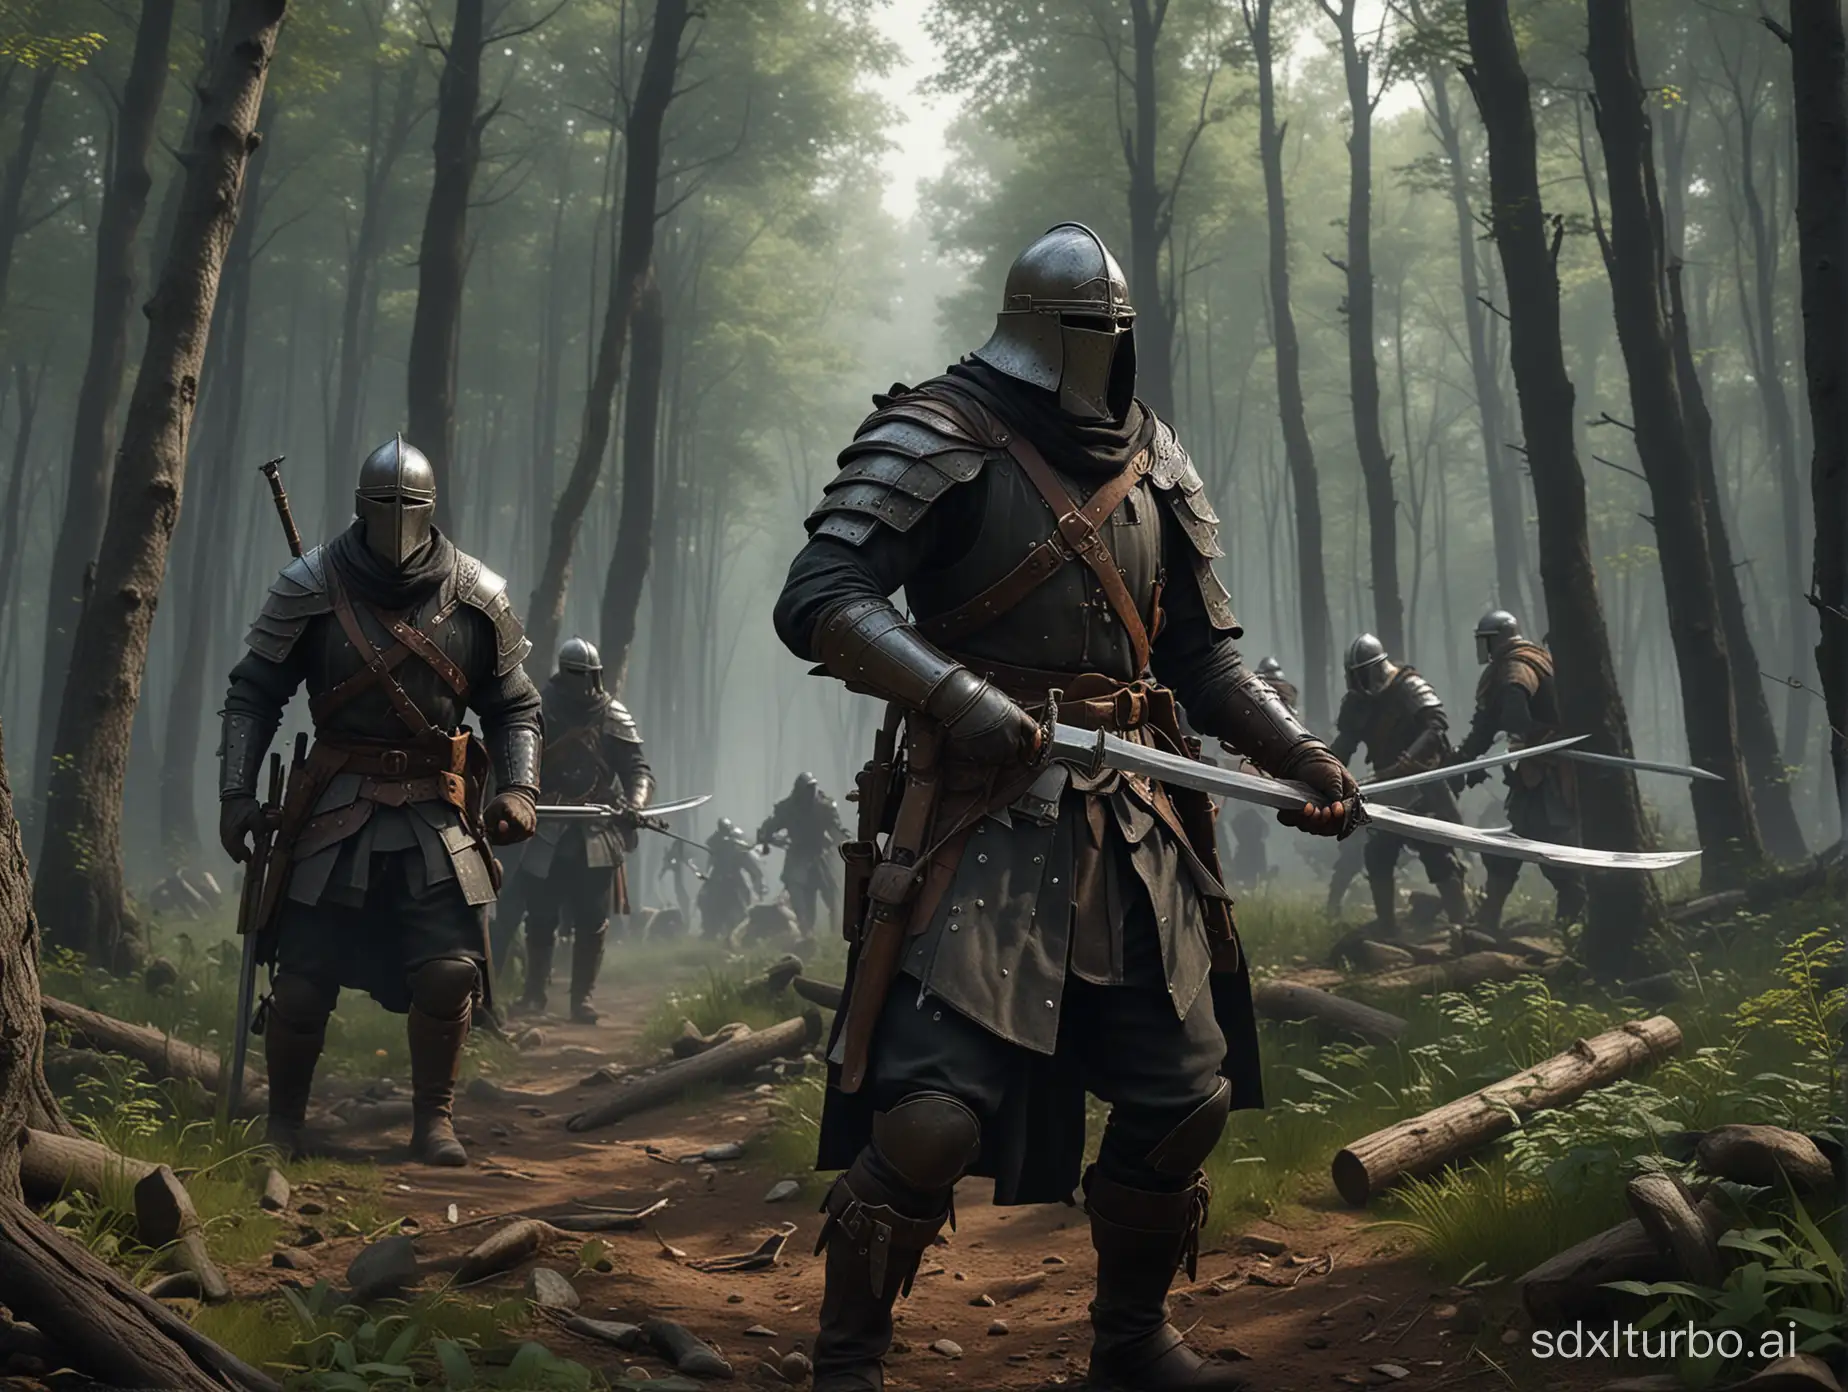 Medieval-Infantrymen-Ambush-BoldHeaded-Bandits-at-Forest-Edge